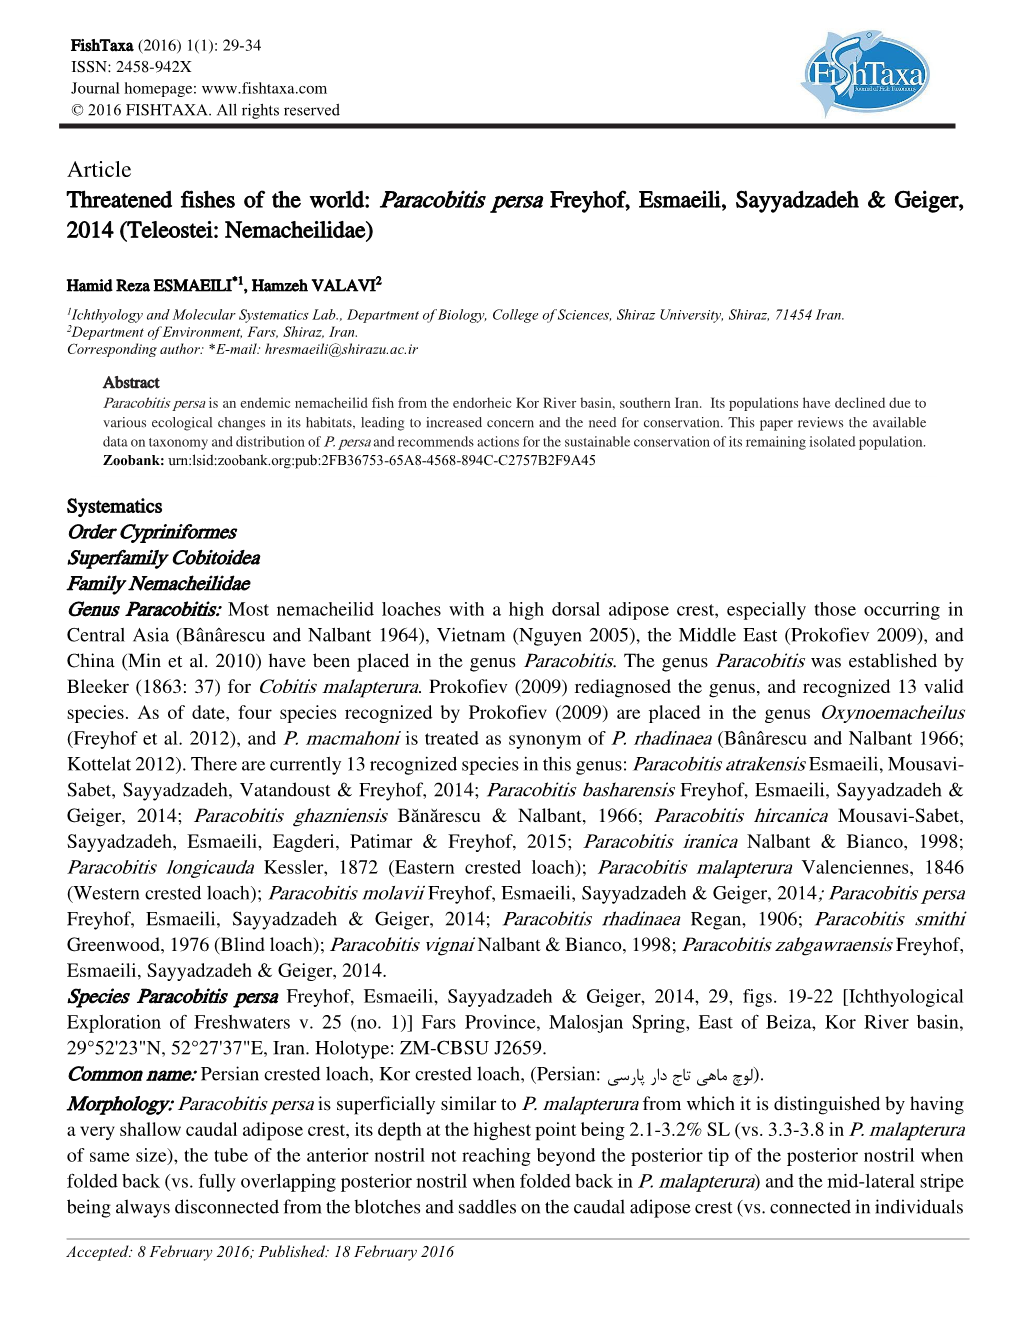 Article Threatened Fishes of the World: Paracobitis Persa Freyhof, Esmaeili, Sayyadzadeh & Geiger, 2014